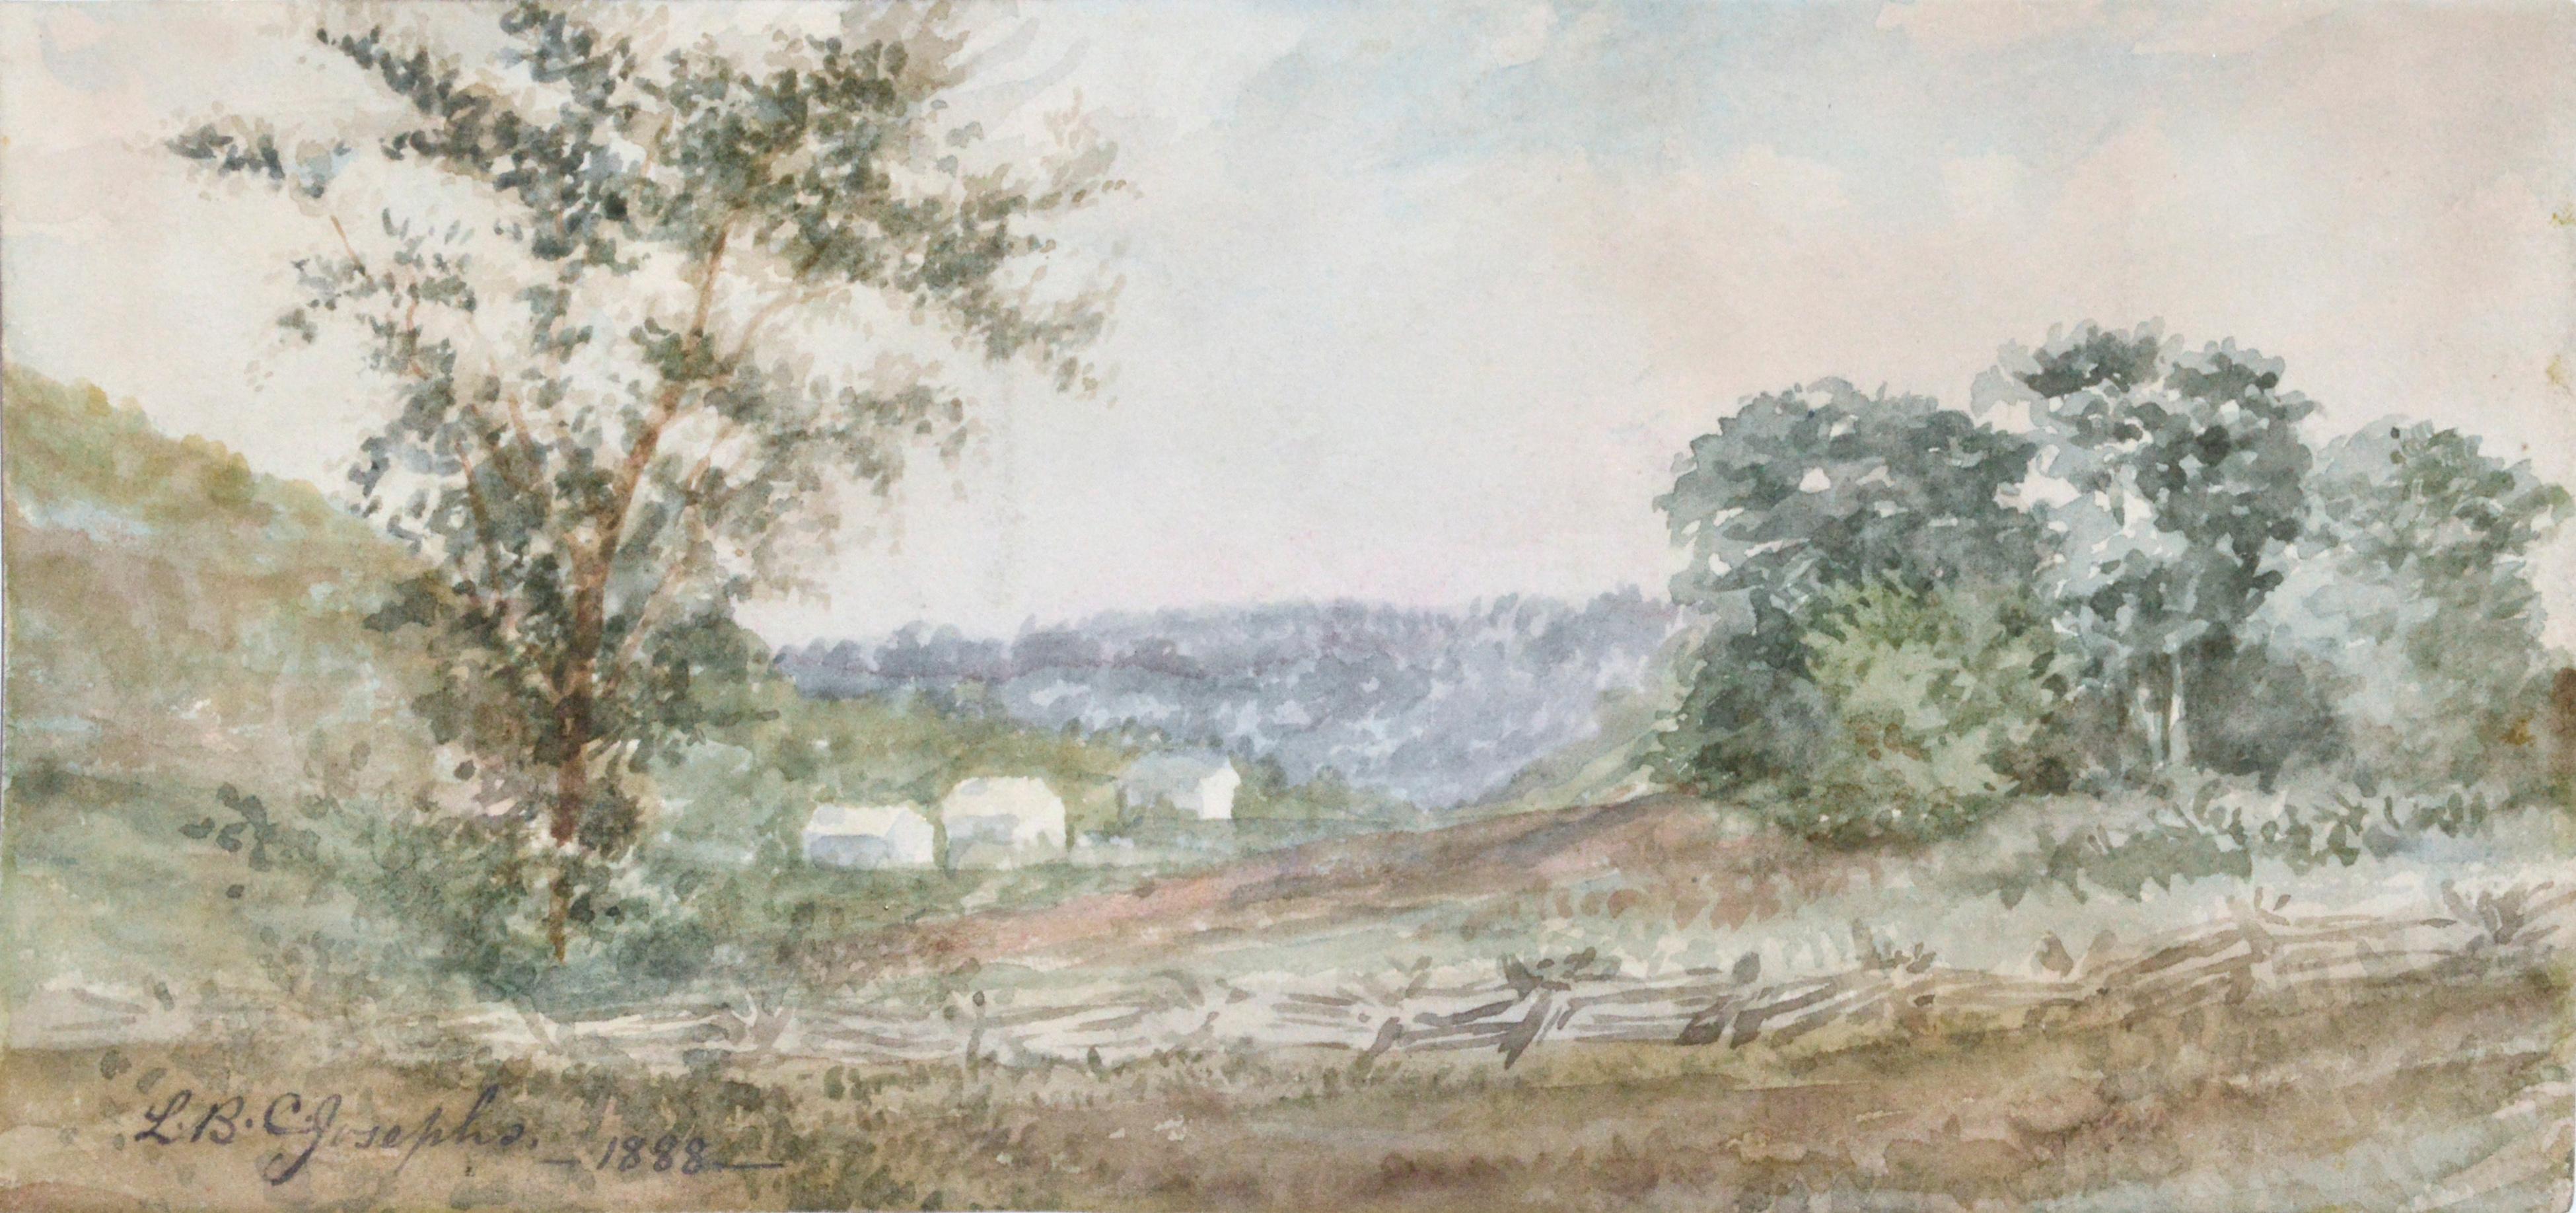 Late 19th Century Hammondsport, Hudson Valley, Finger Lakes, New York Landscape  - Painting by LBC Josephs